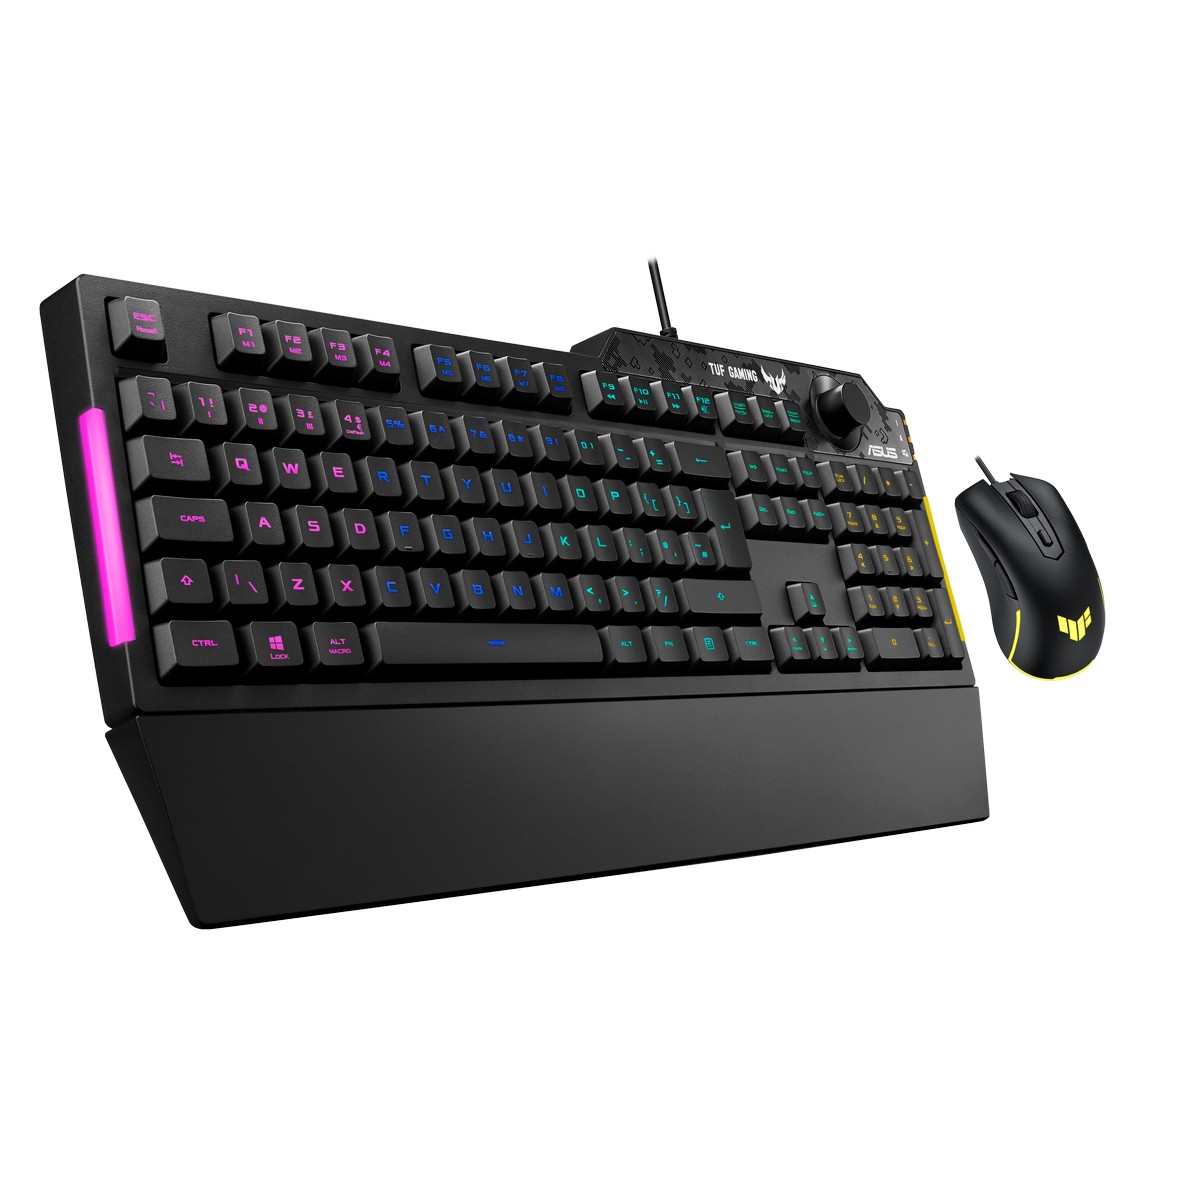 Asus - ASUS K1 Keyboard and M3 Mouse Gaming Bundle - UK Layout